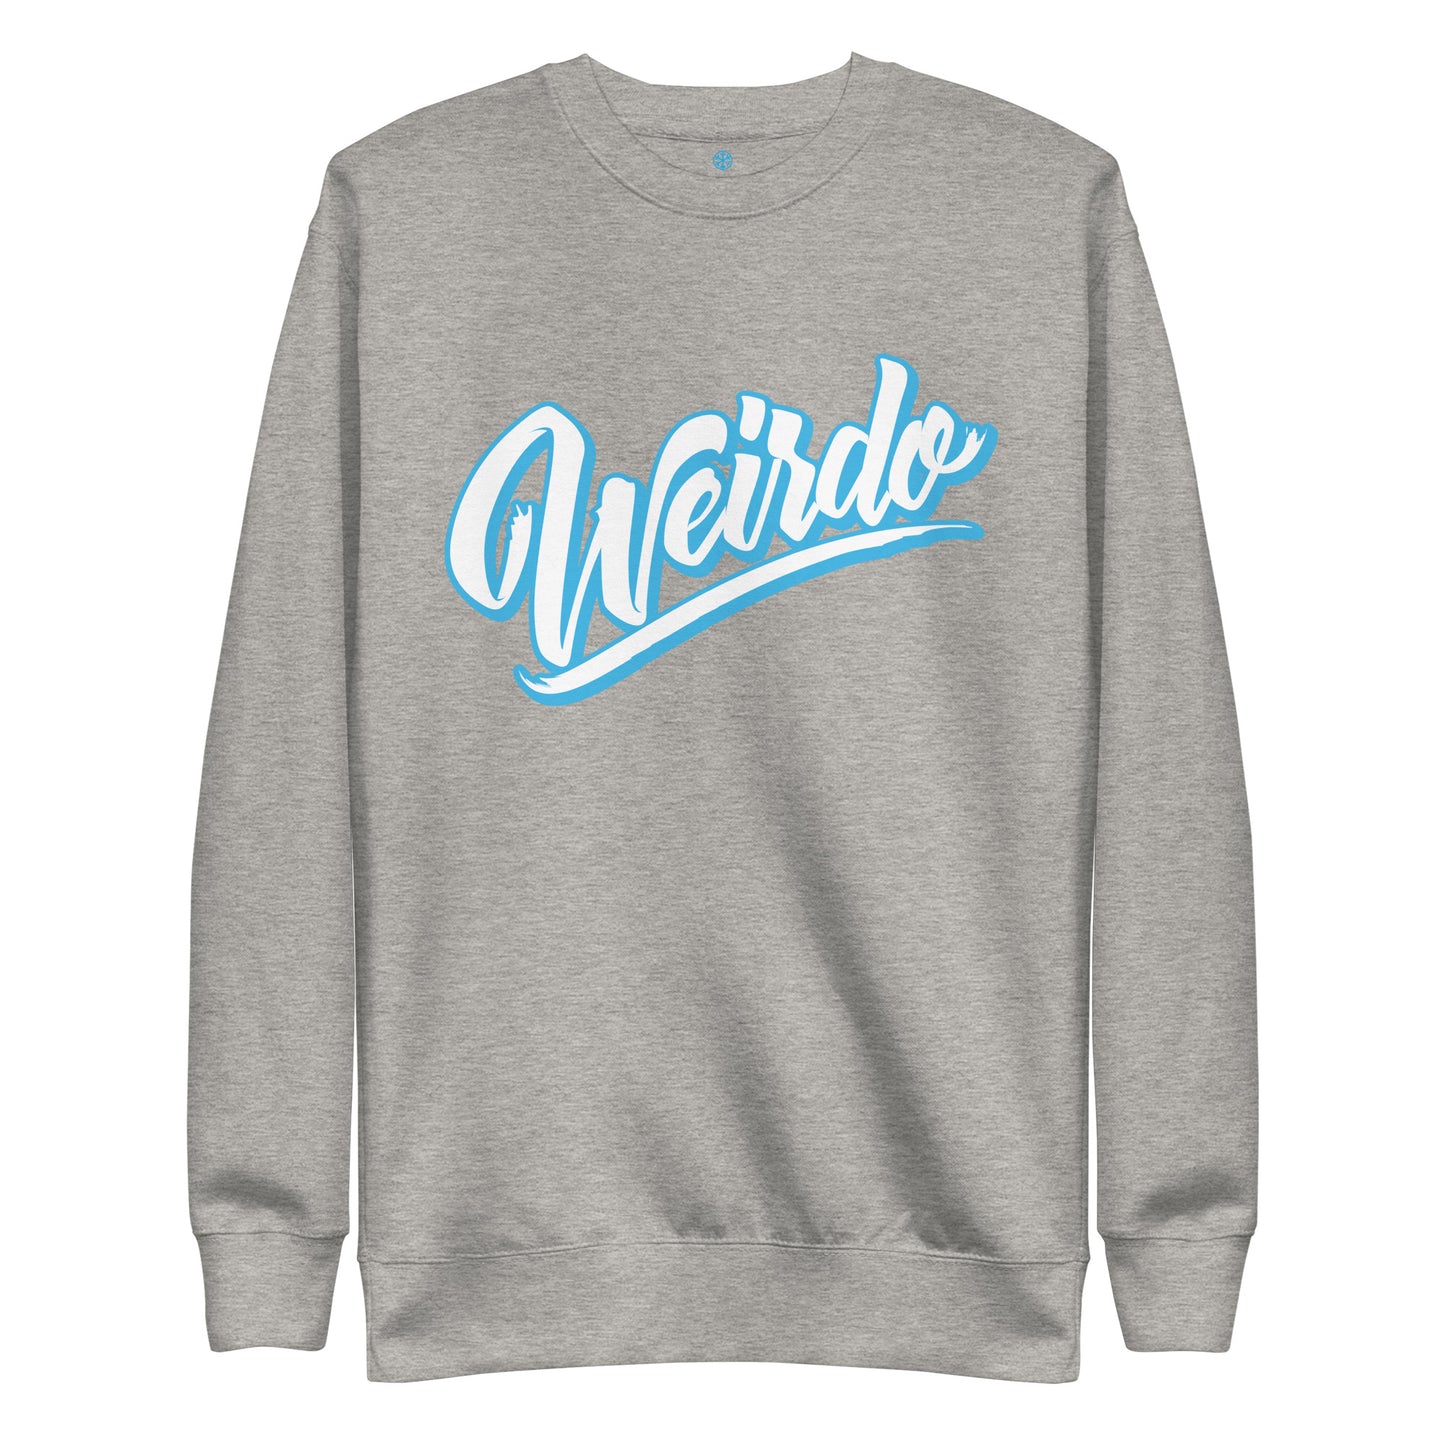 sweatshirt Weirdo gray by B.Different Clothing independent streetwear brand inspired by street art graffiti